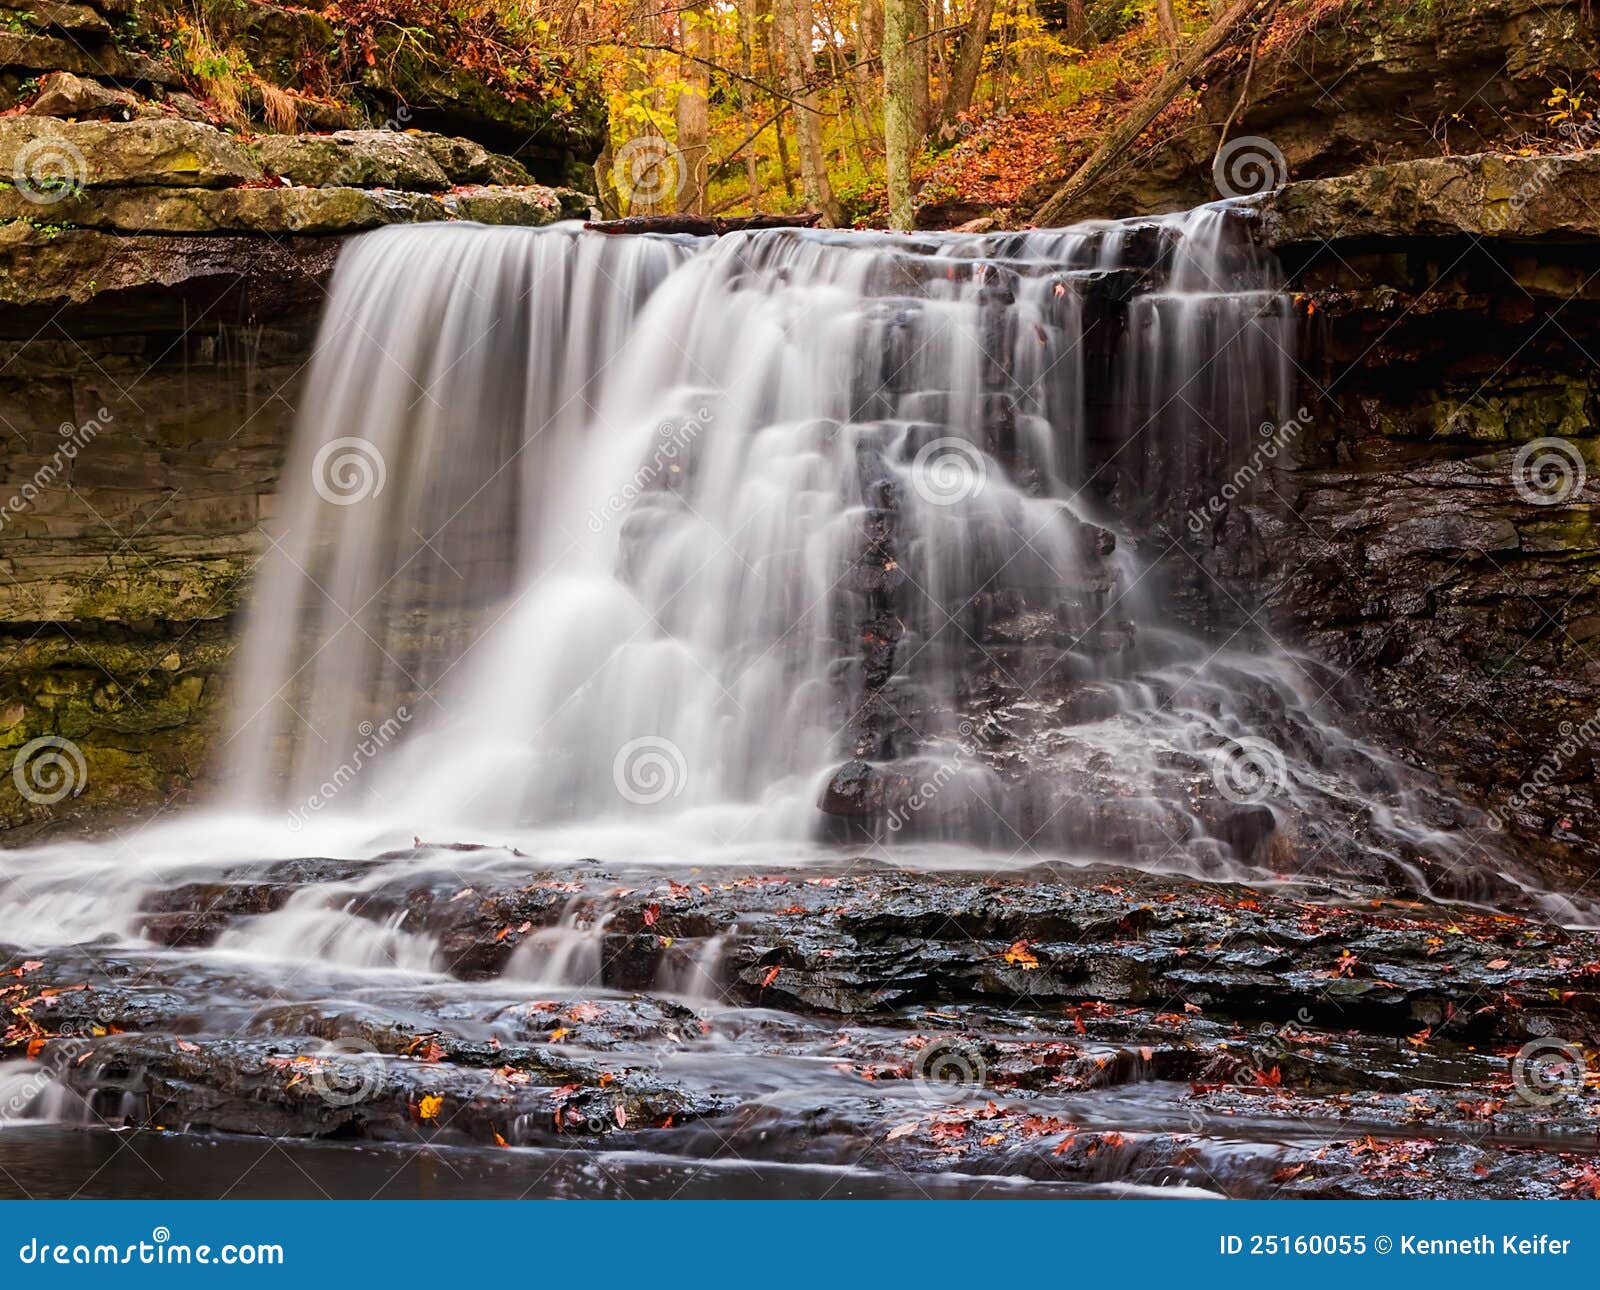 mccormick's creek falls in fall